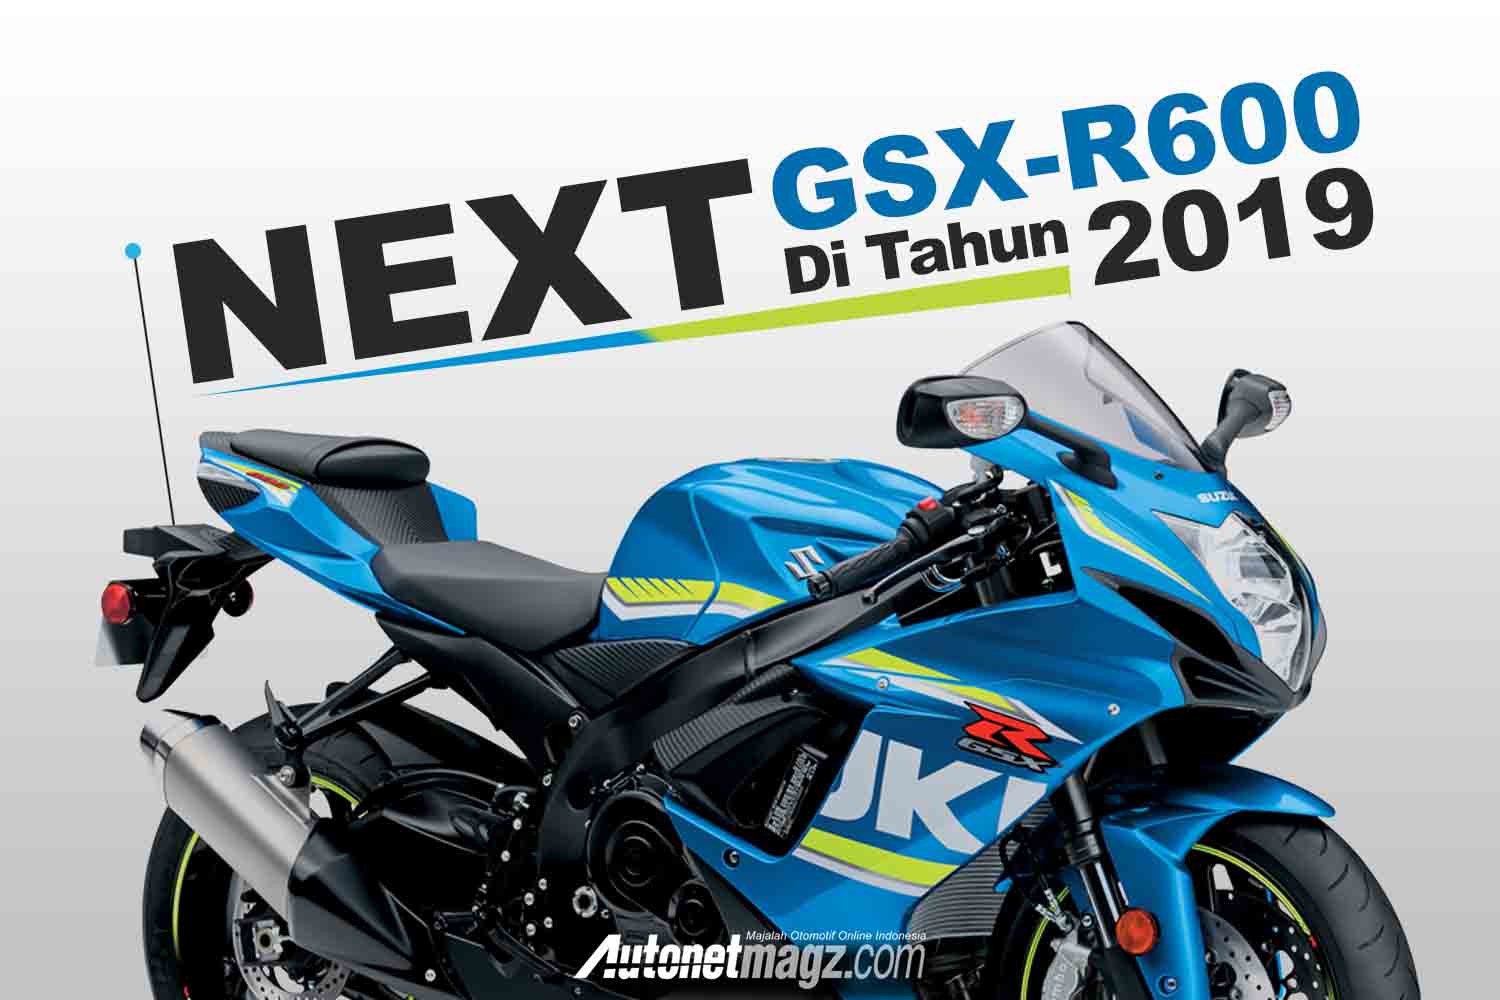 Berita, next gsx: Generasi Terbaru Suzuki GSX-R600 Hadir di Tahun 2019